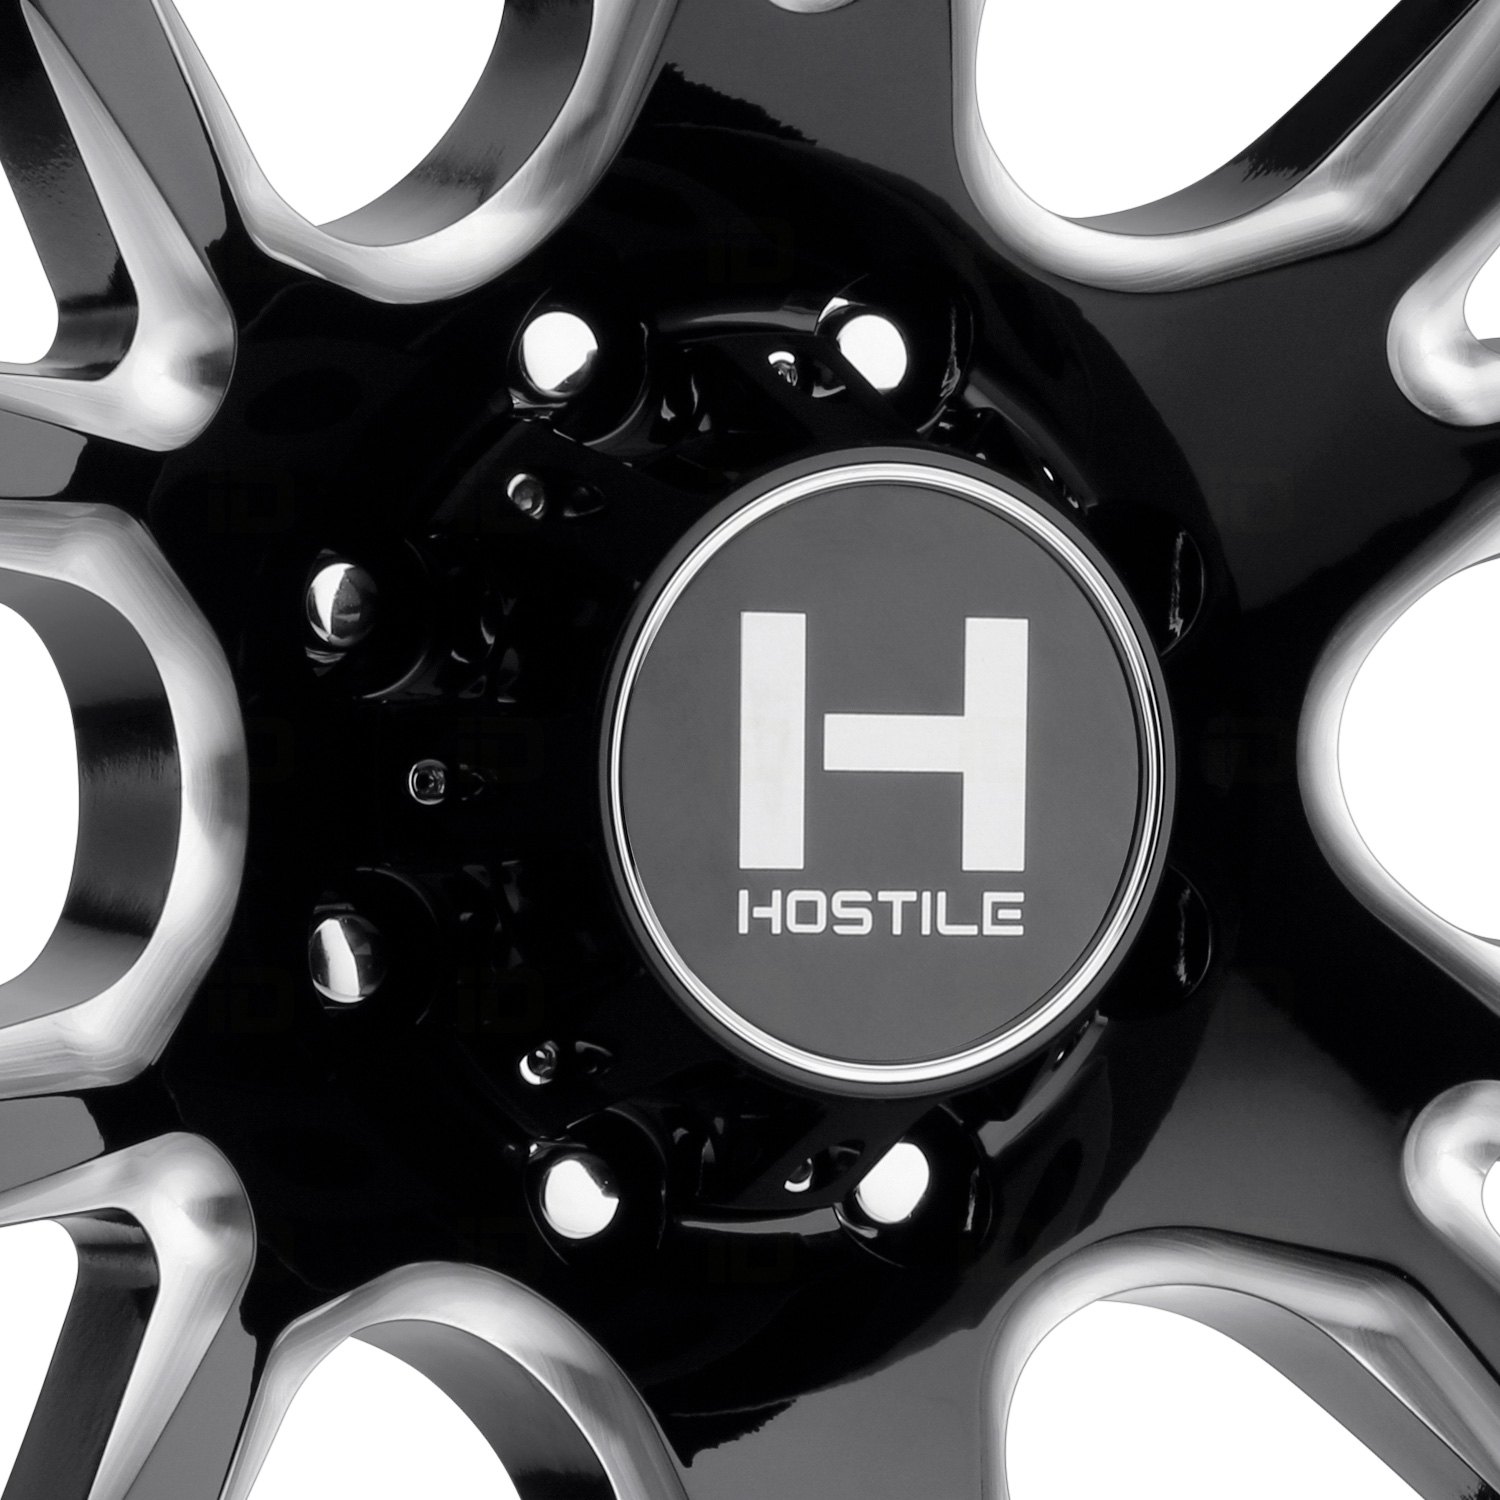 Hostile H113 RAGE Wheel 22x10 (-25, 6x139.7, 106) Black Single Rim.